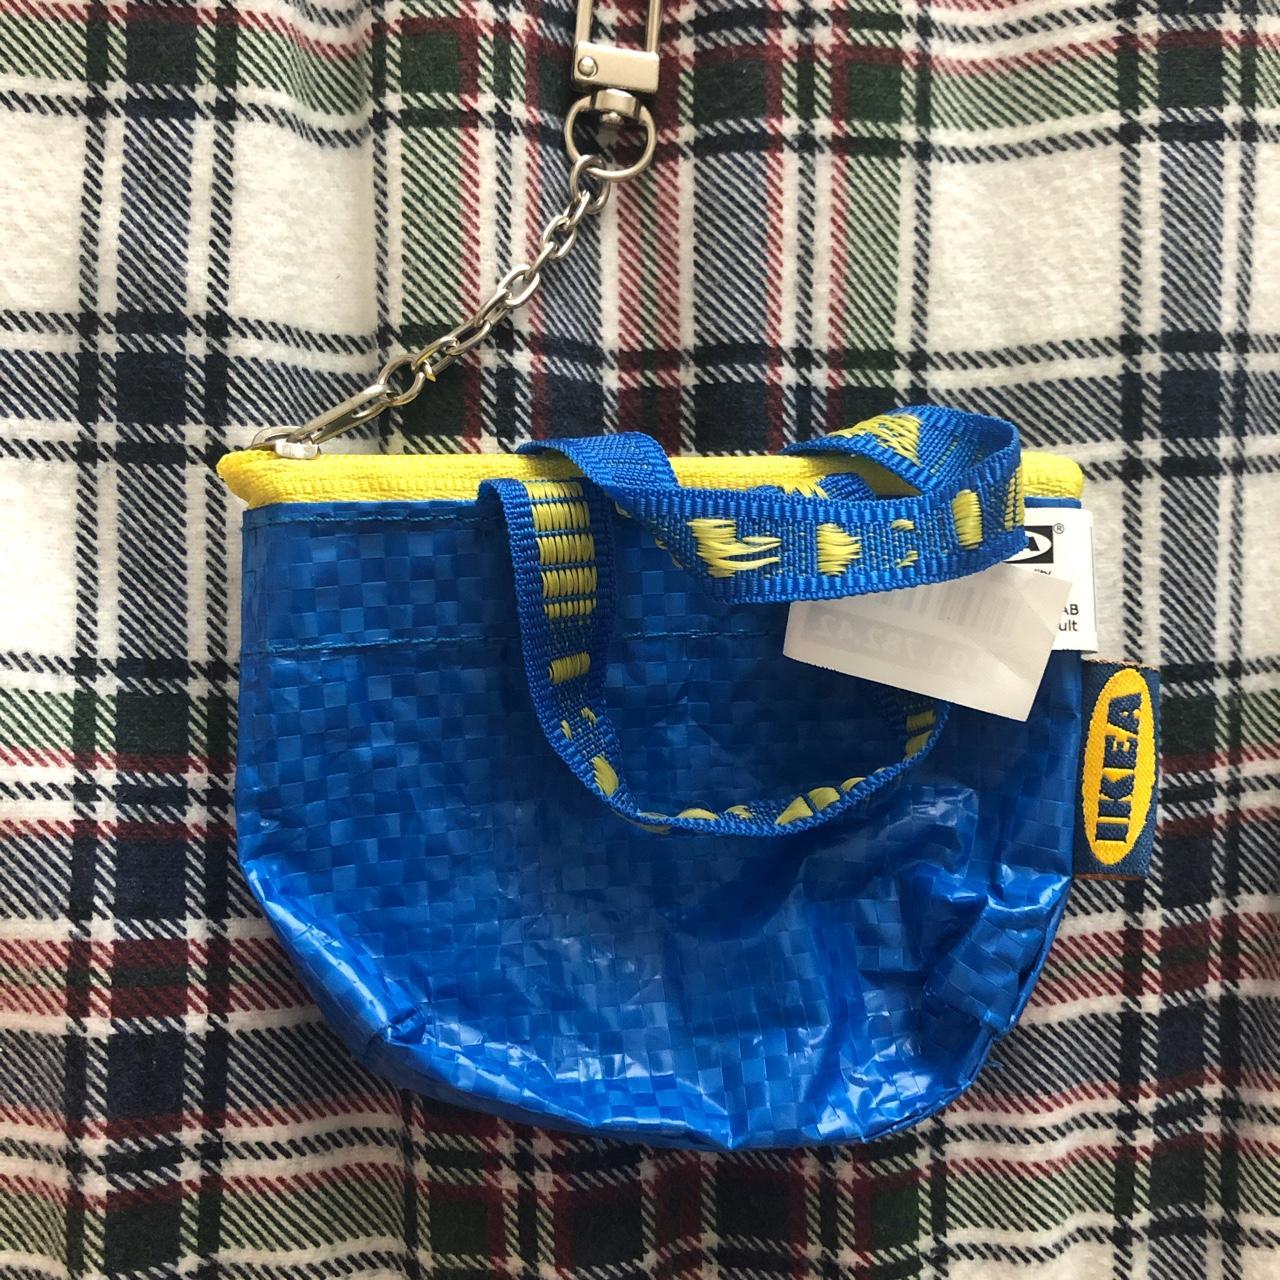 IKEA Women's Blue and Yellow Bag